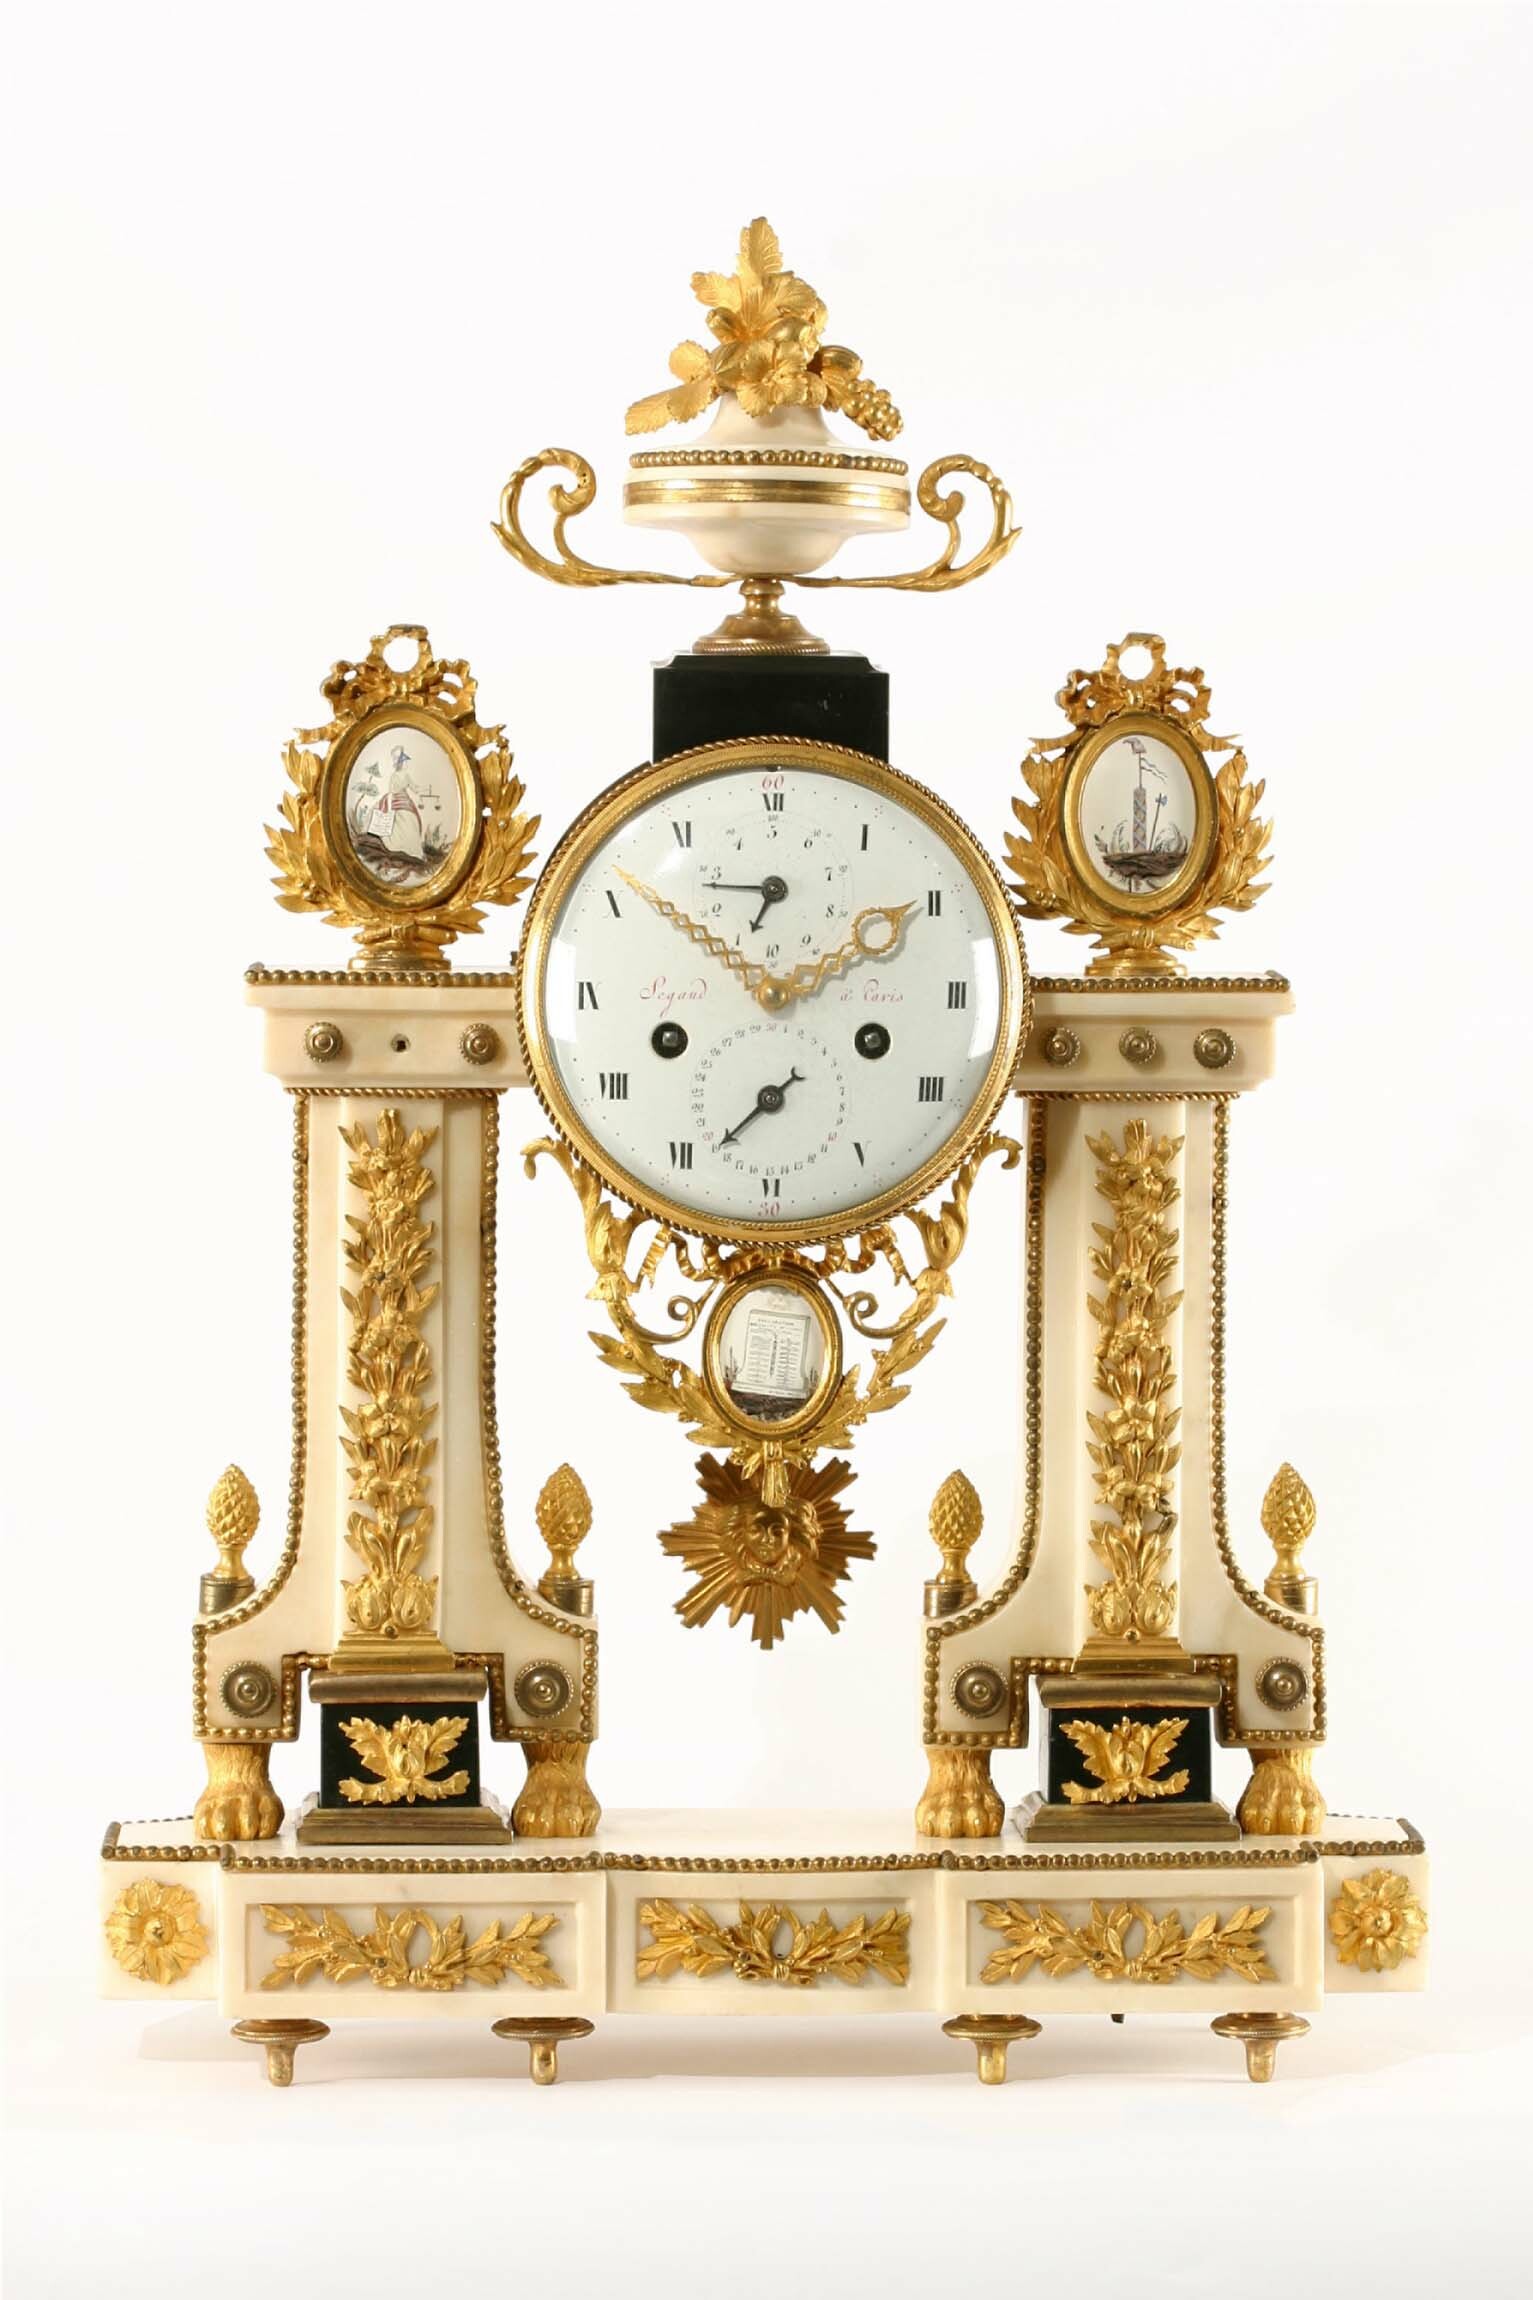 Tischuhr, Segaud, Paris, um 1795 (Deutsches Uhrenmuseum CC BY-SA)